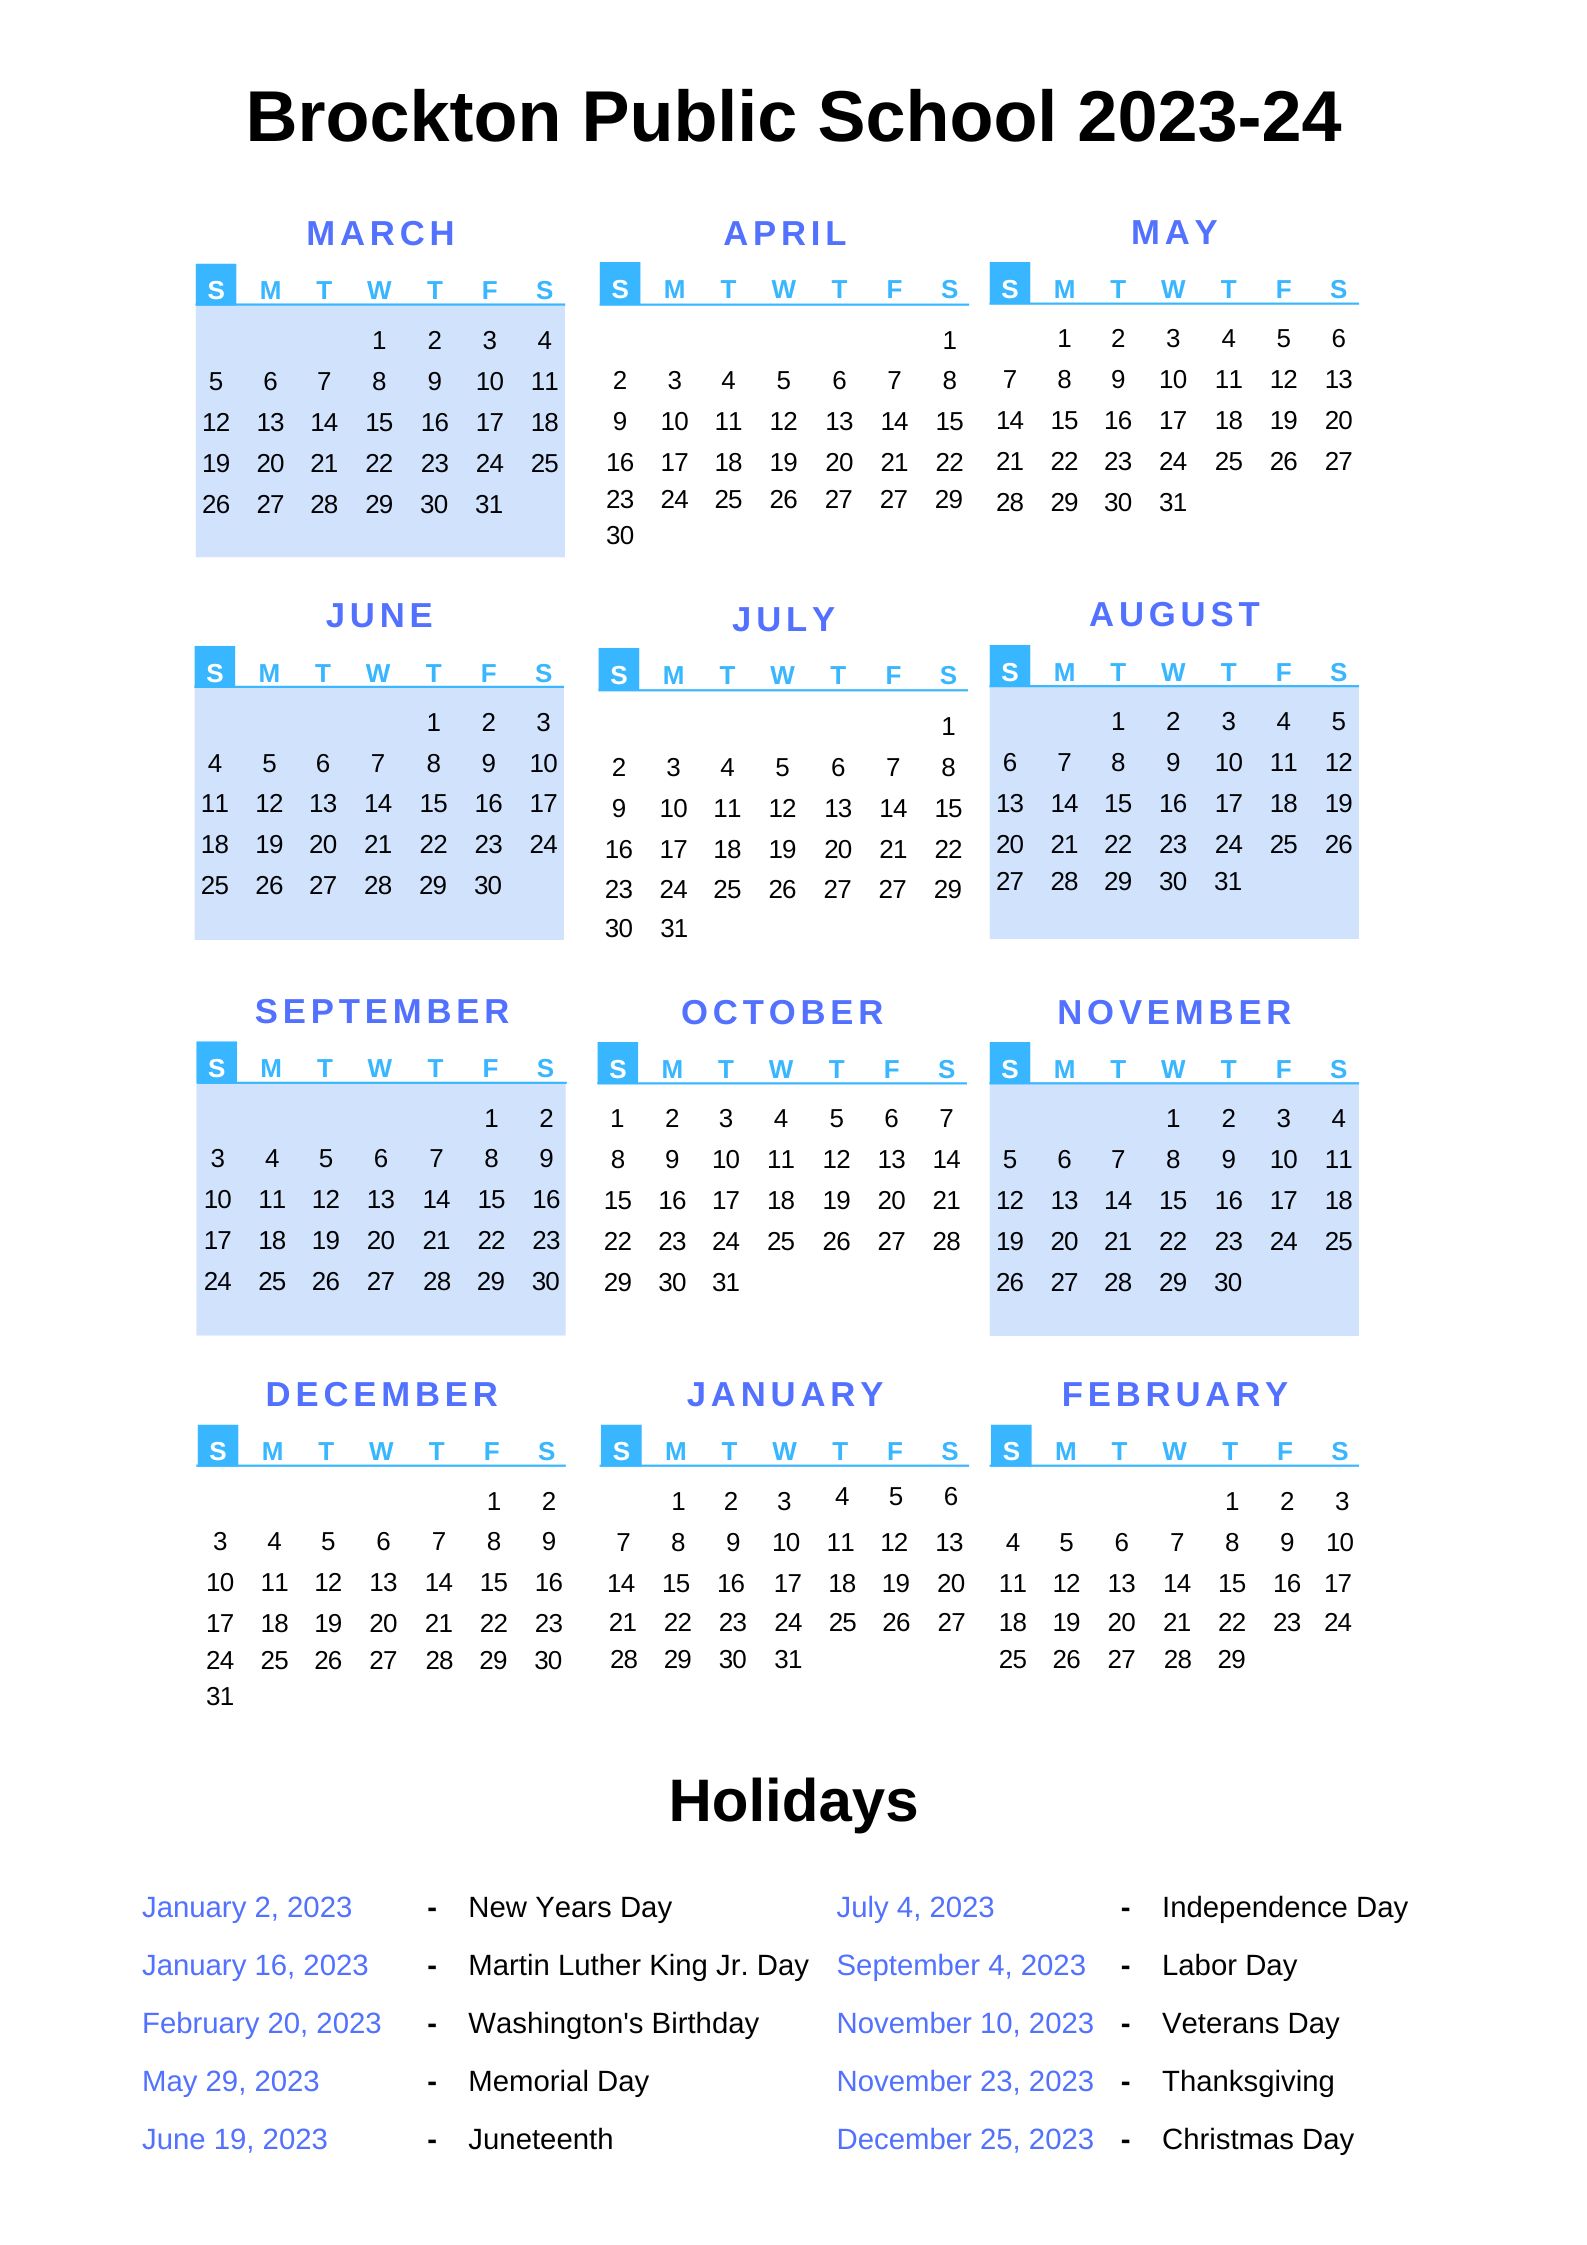 Brockton Public Schools Calendar 2023 24 With Holidays